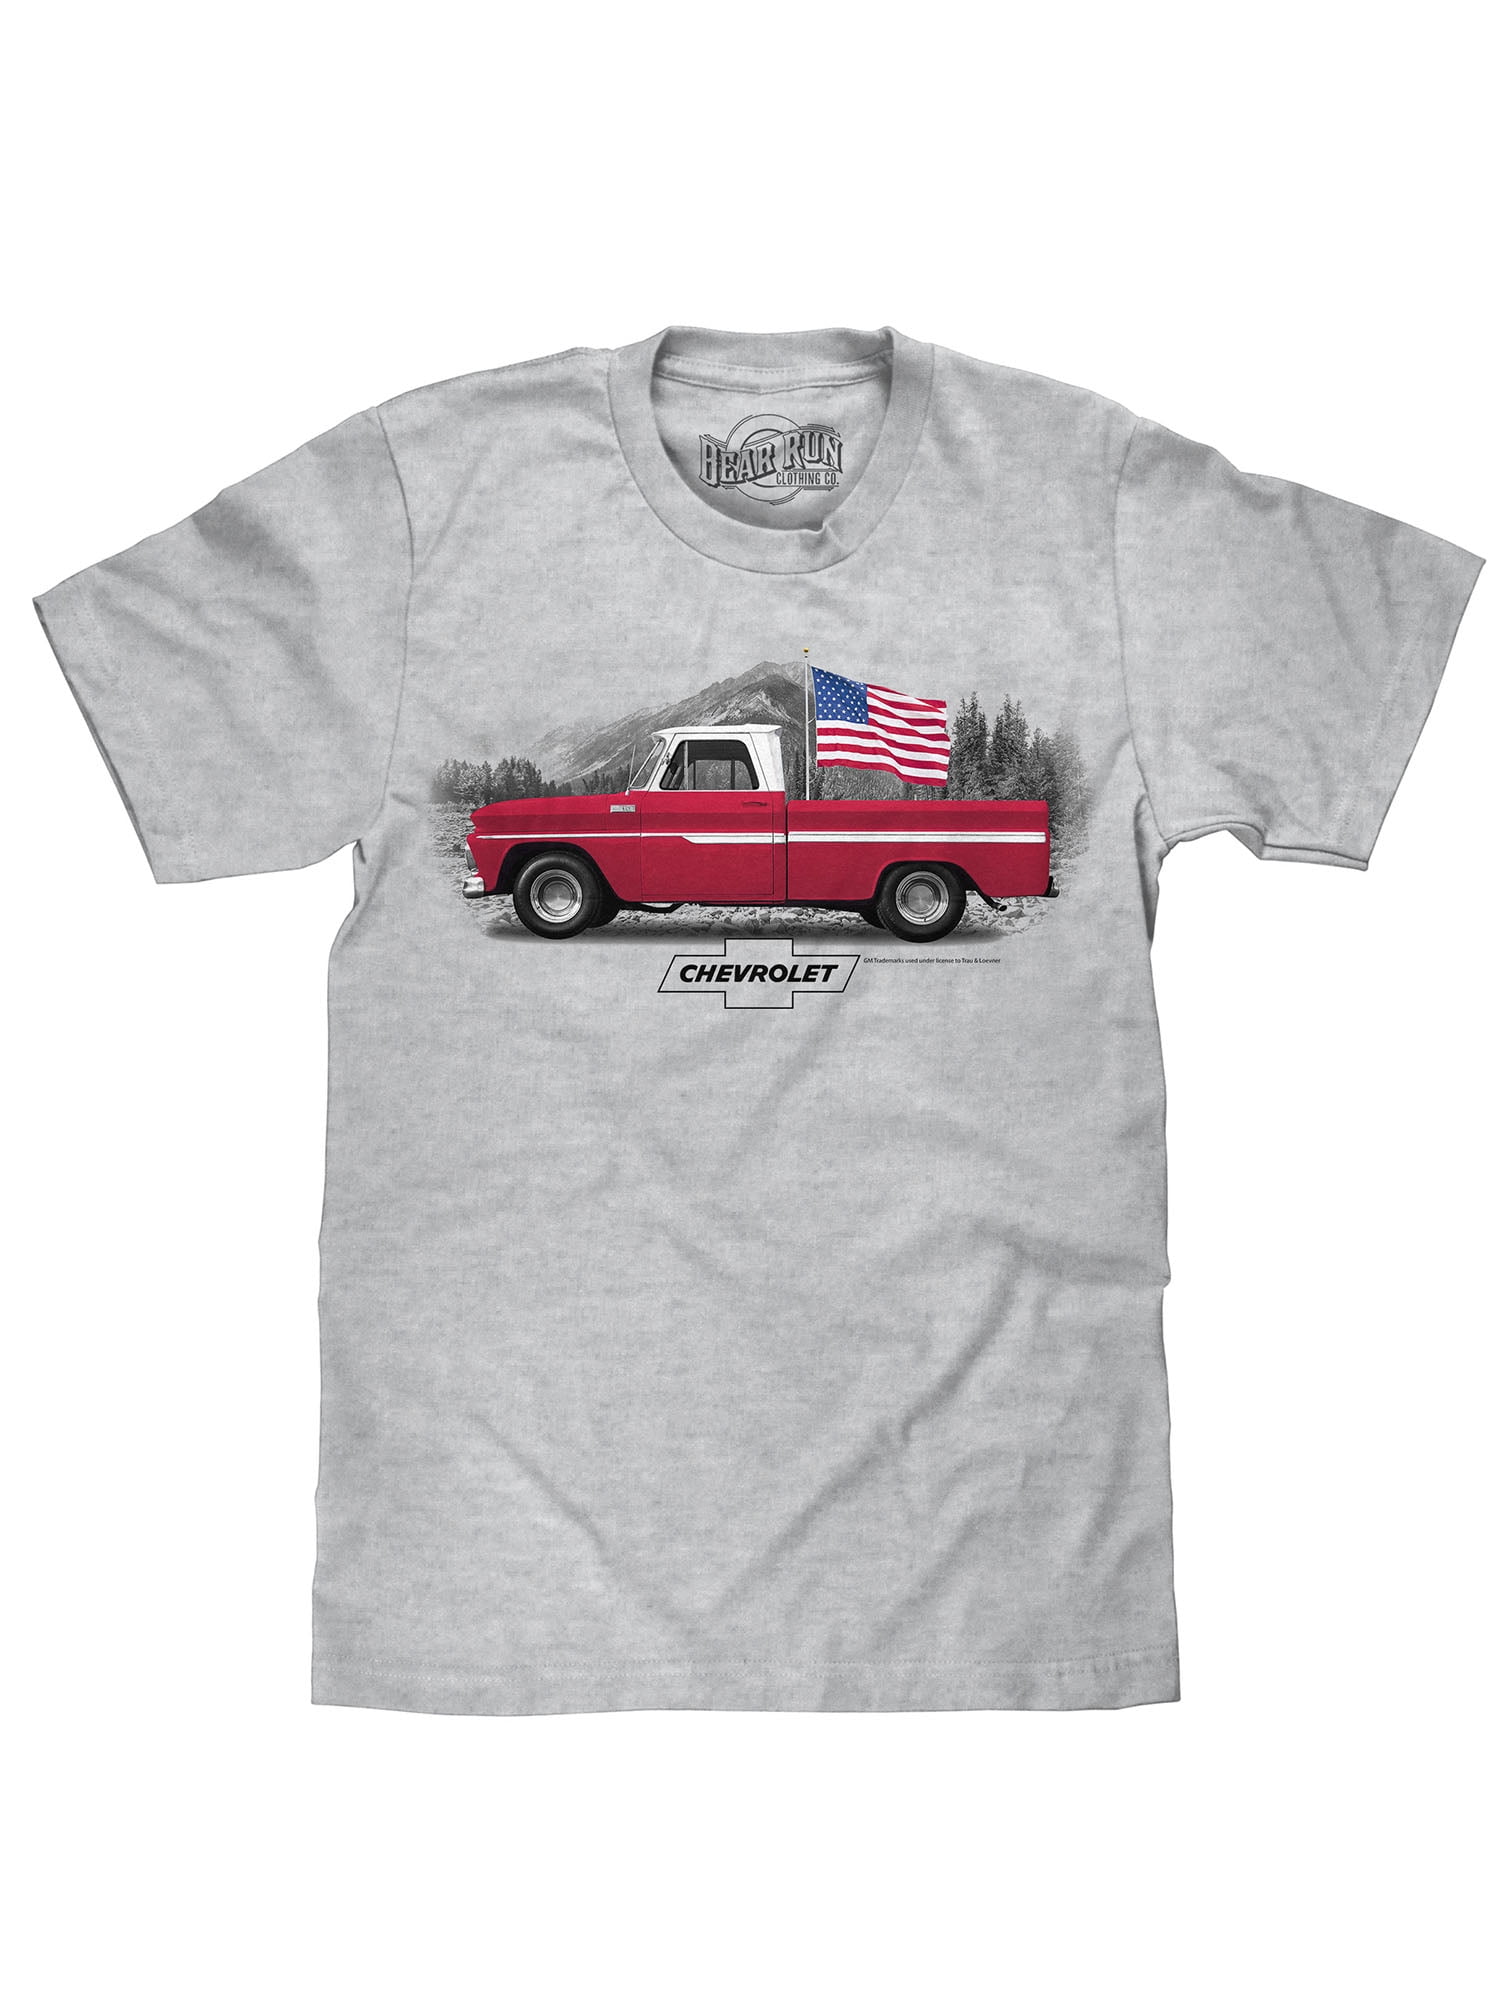 Hotrod C10 Built Not Bought Vintage 1970's Truck Tshirt